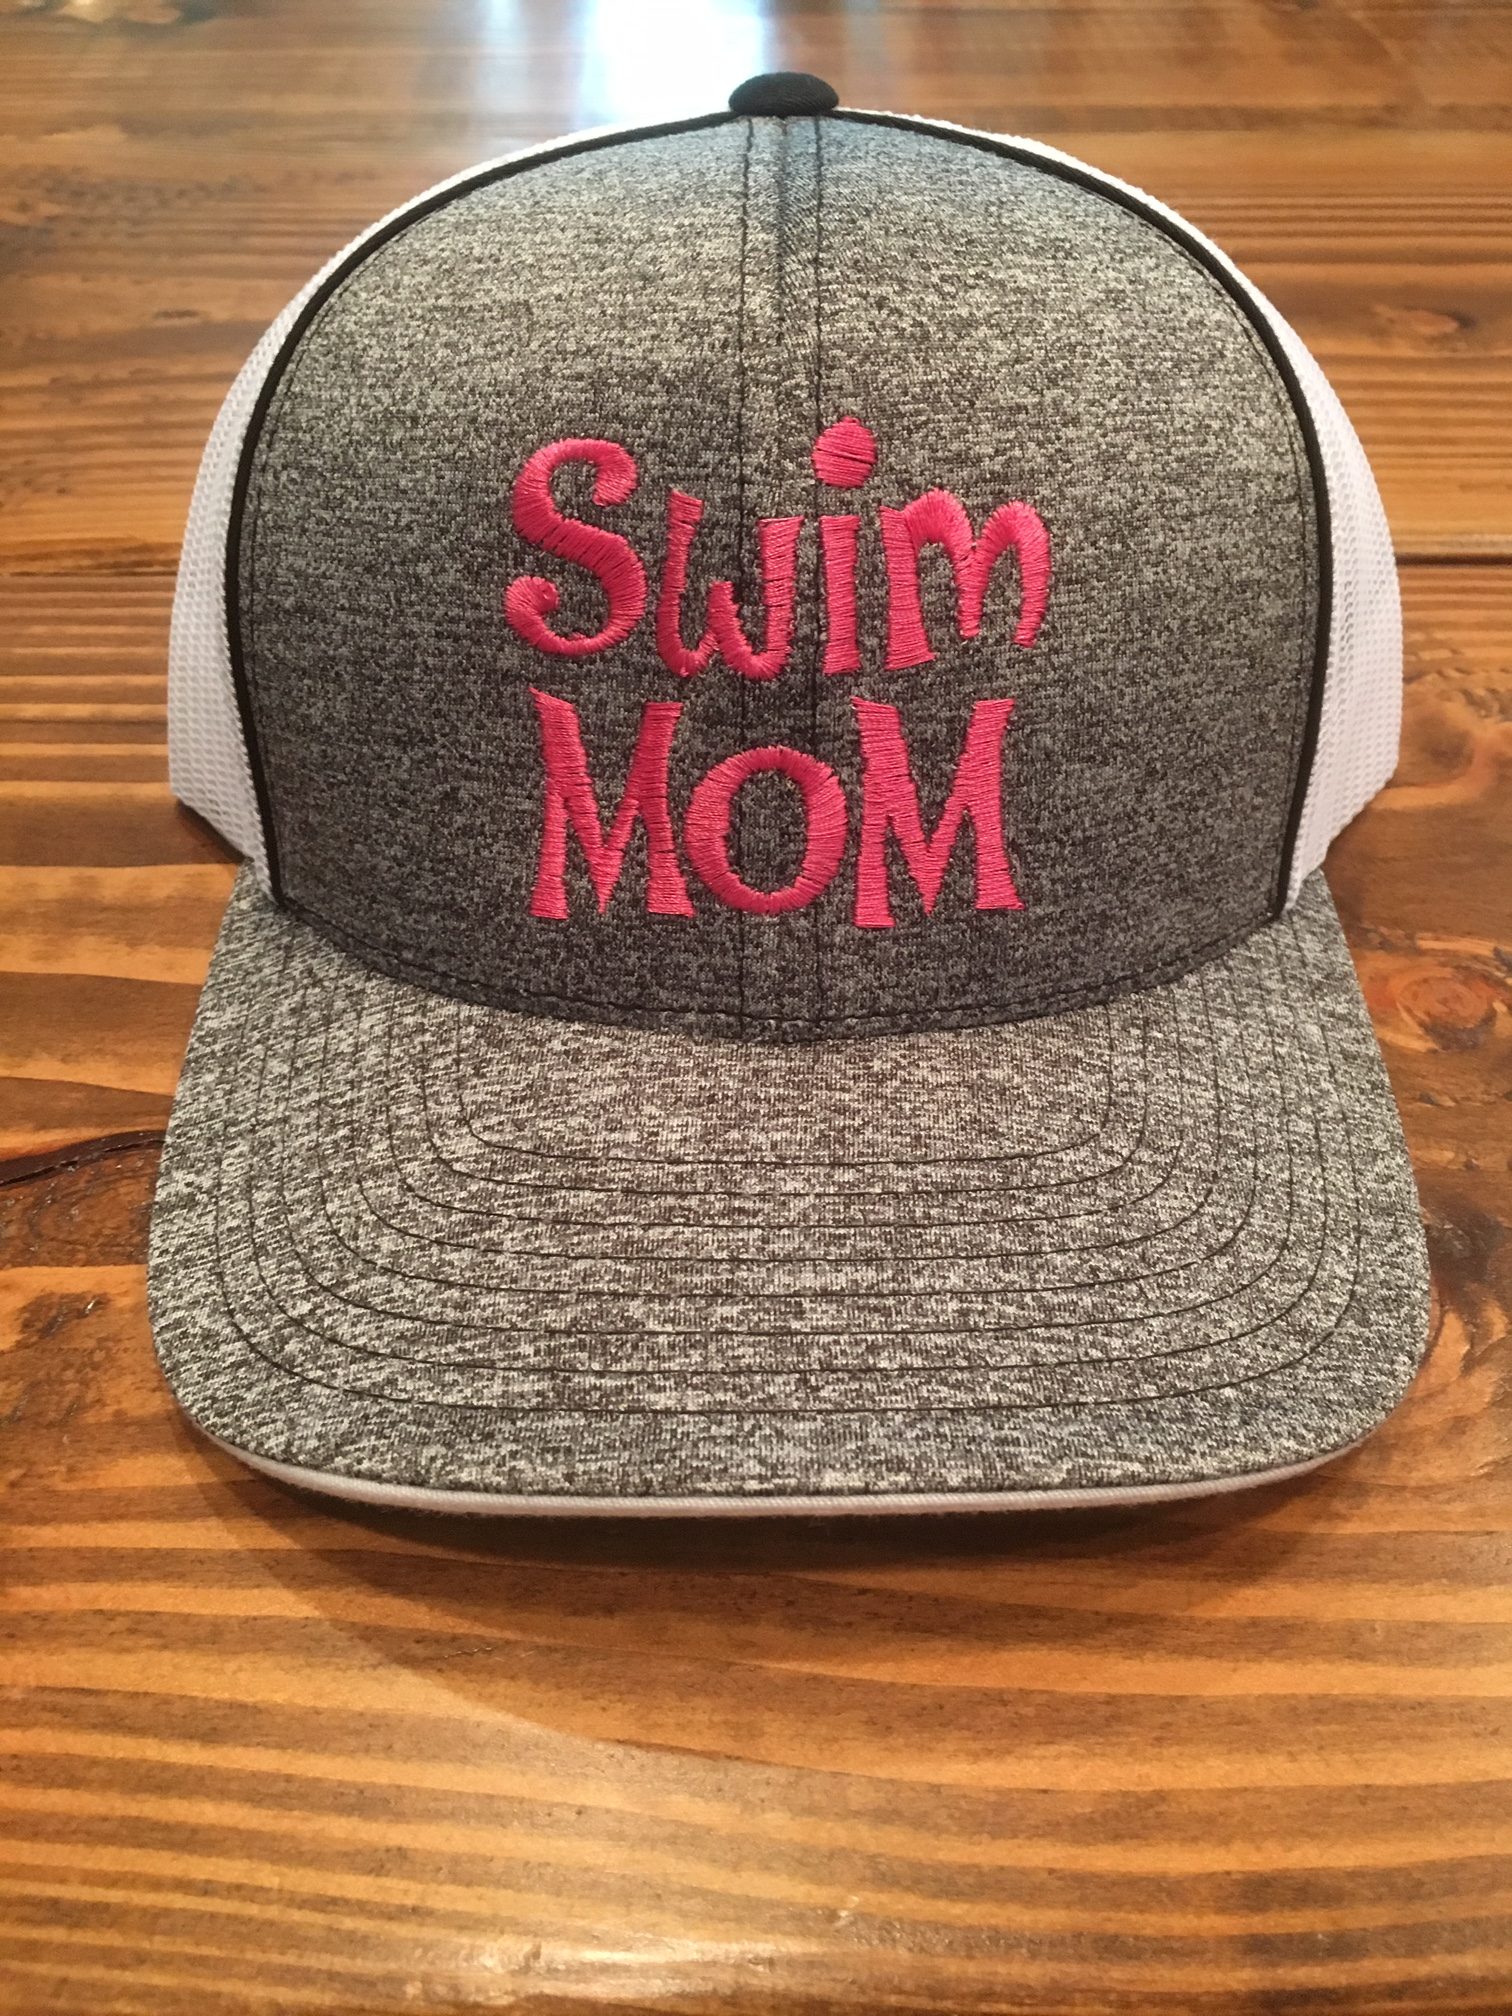 Hat – Swim Mom Grey and Pink Adjustable